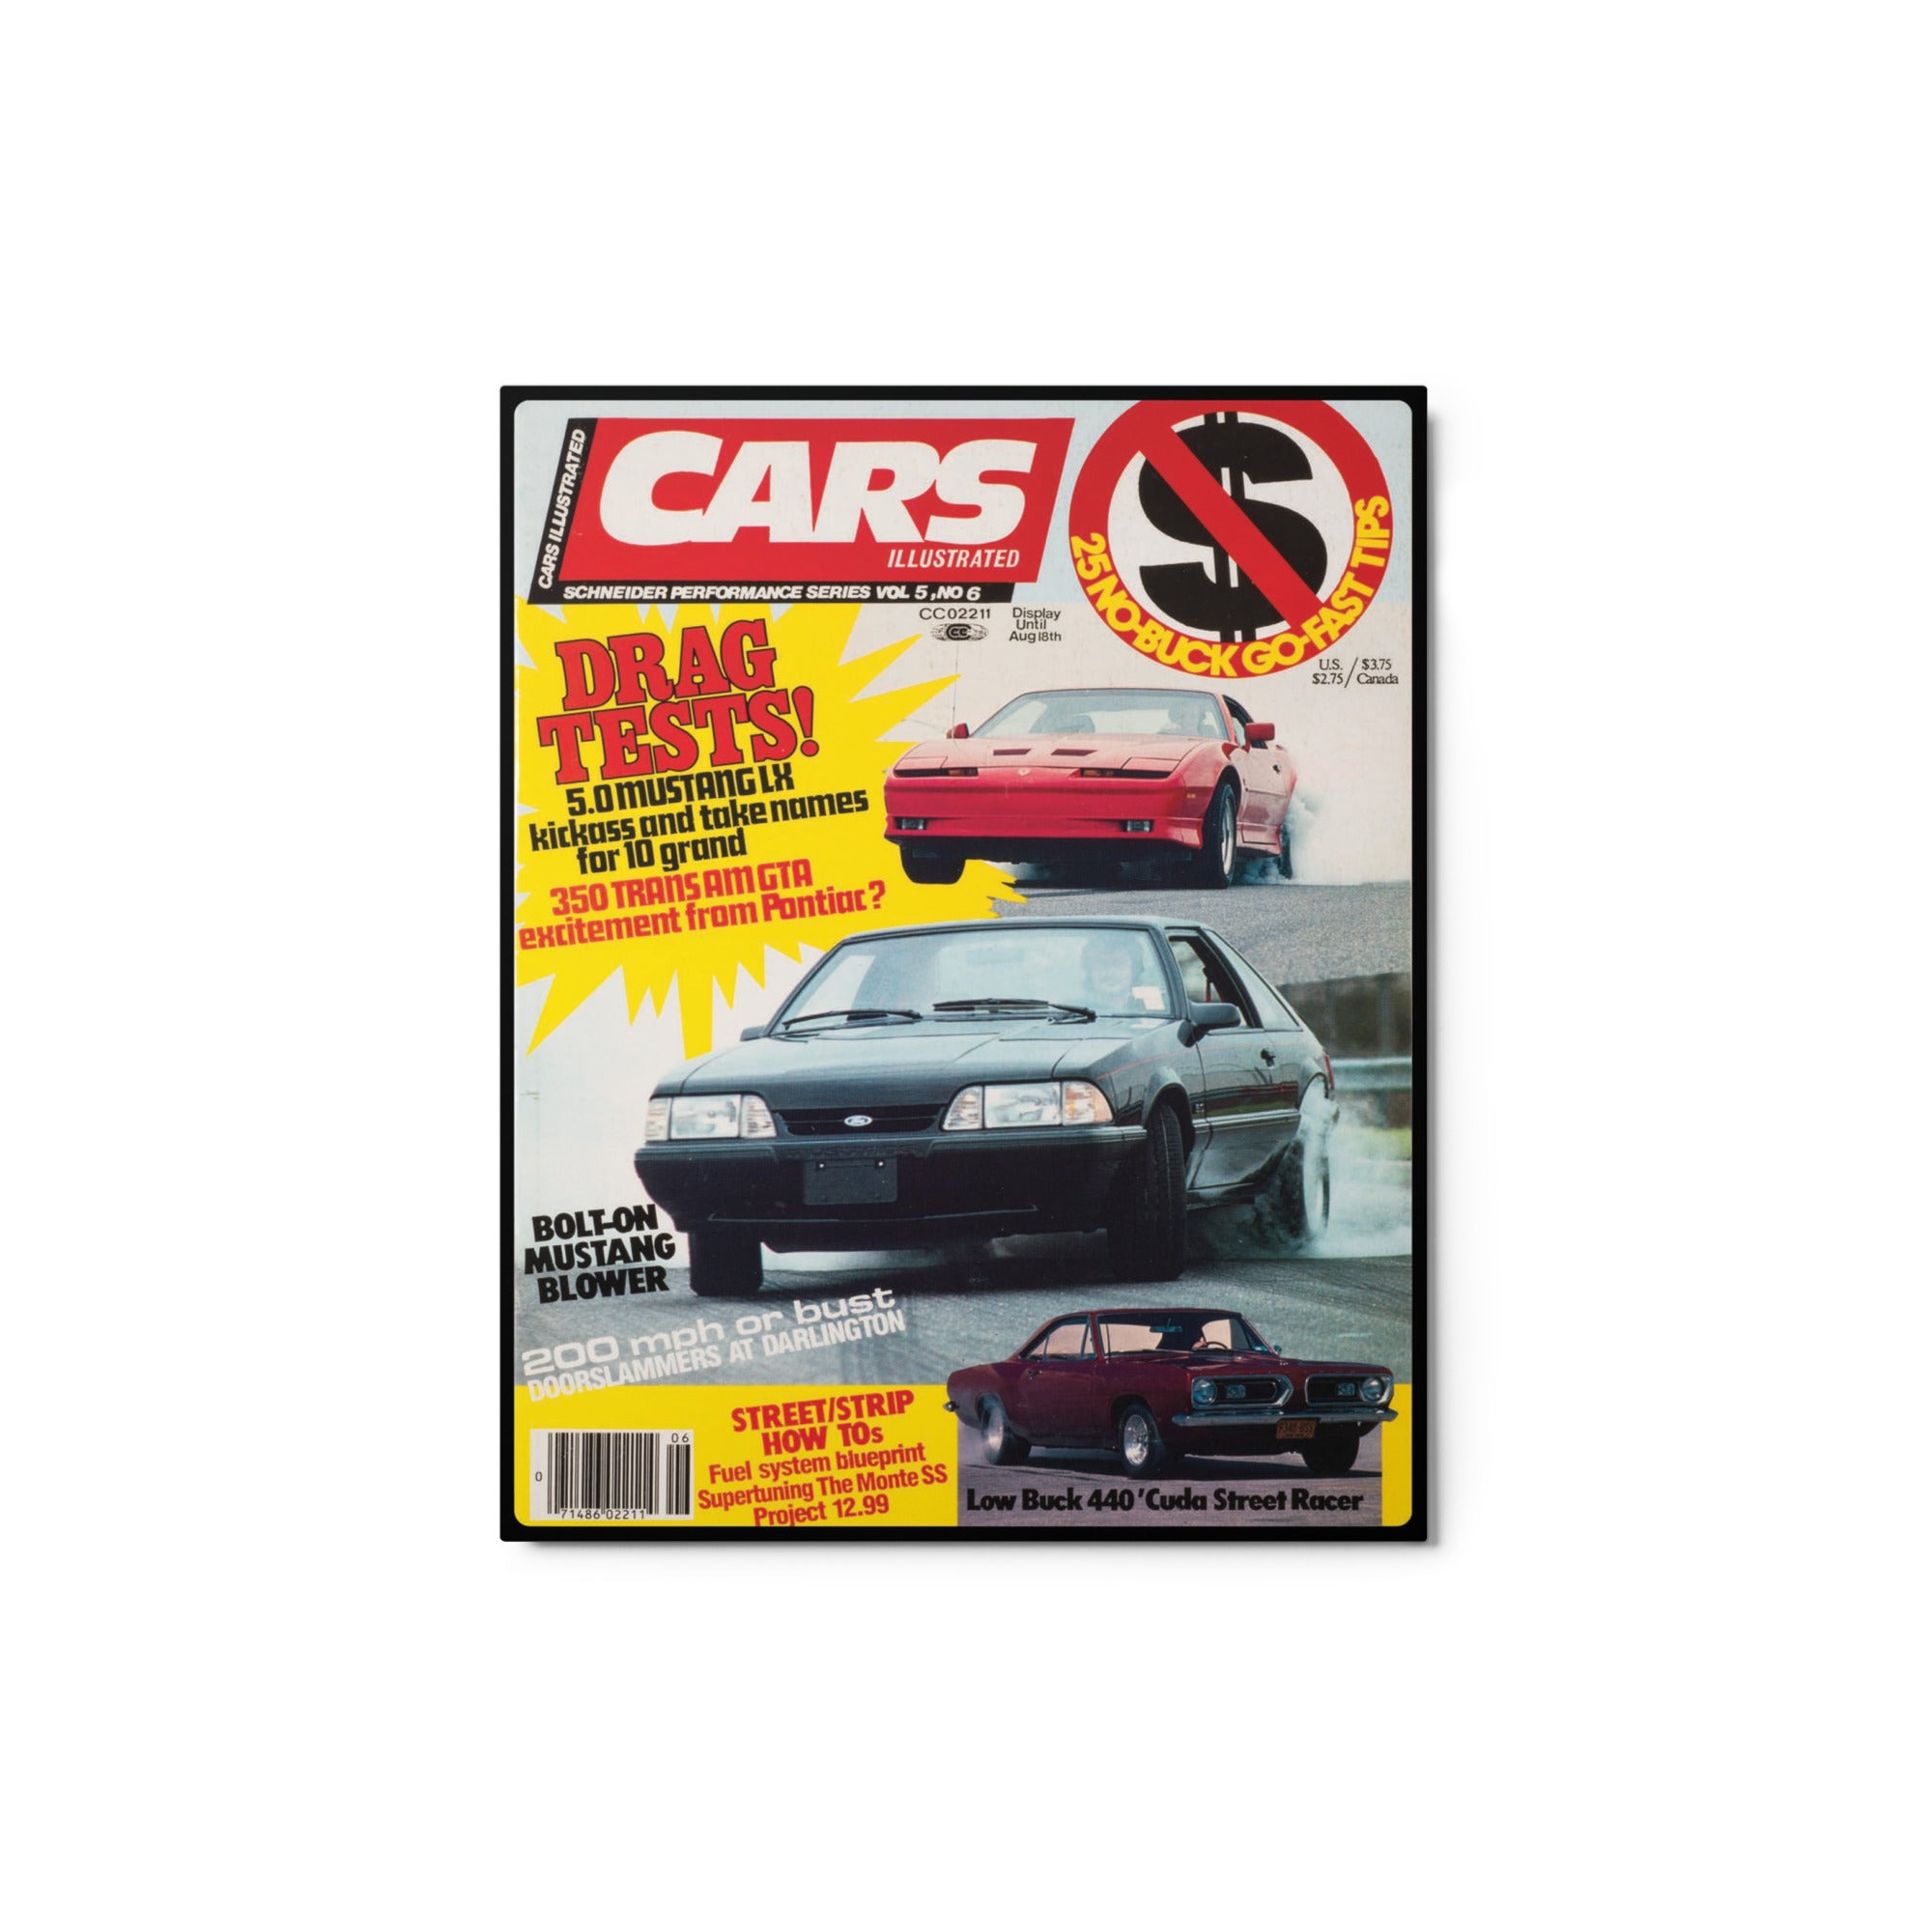 Cars Illustrated - Vol 5, No 6 8x10 Metal Print Cover Art